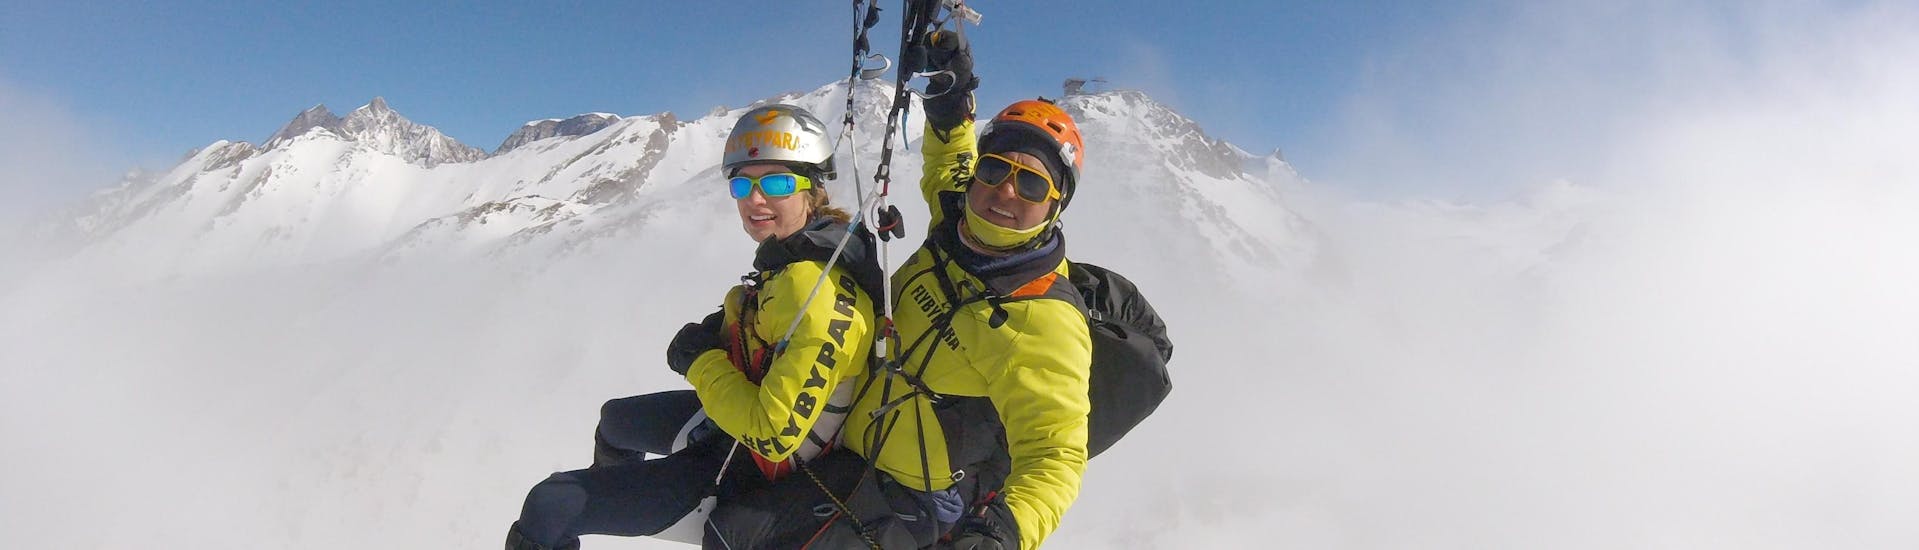 Thermisch tandem paragliding in Zermatt - Matterhorn.